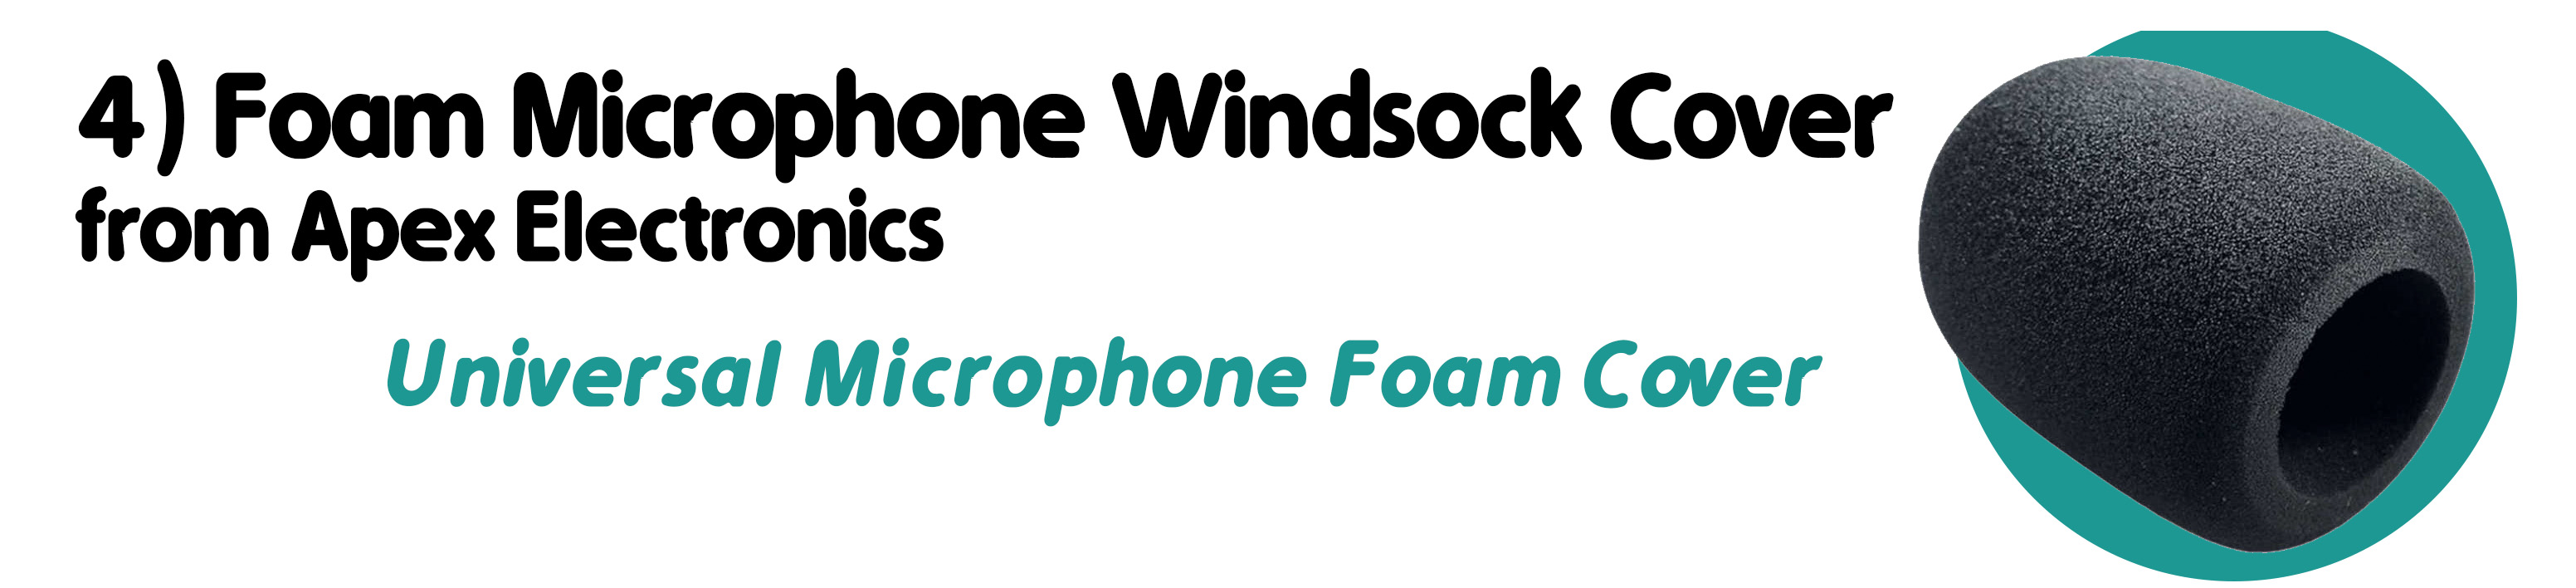 Apex Microphone Windsock